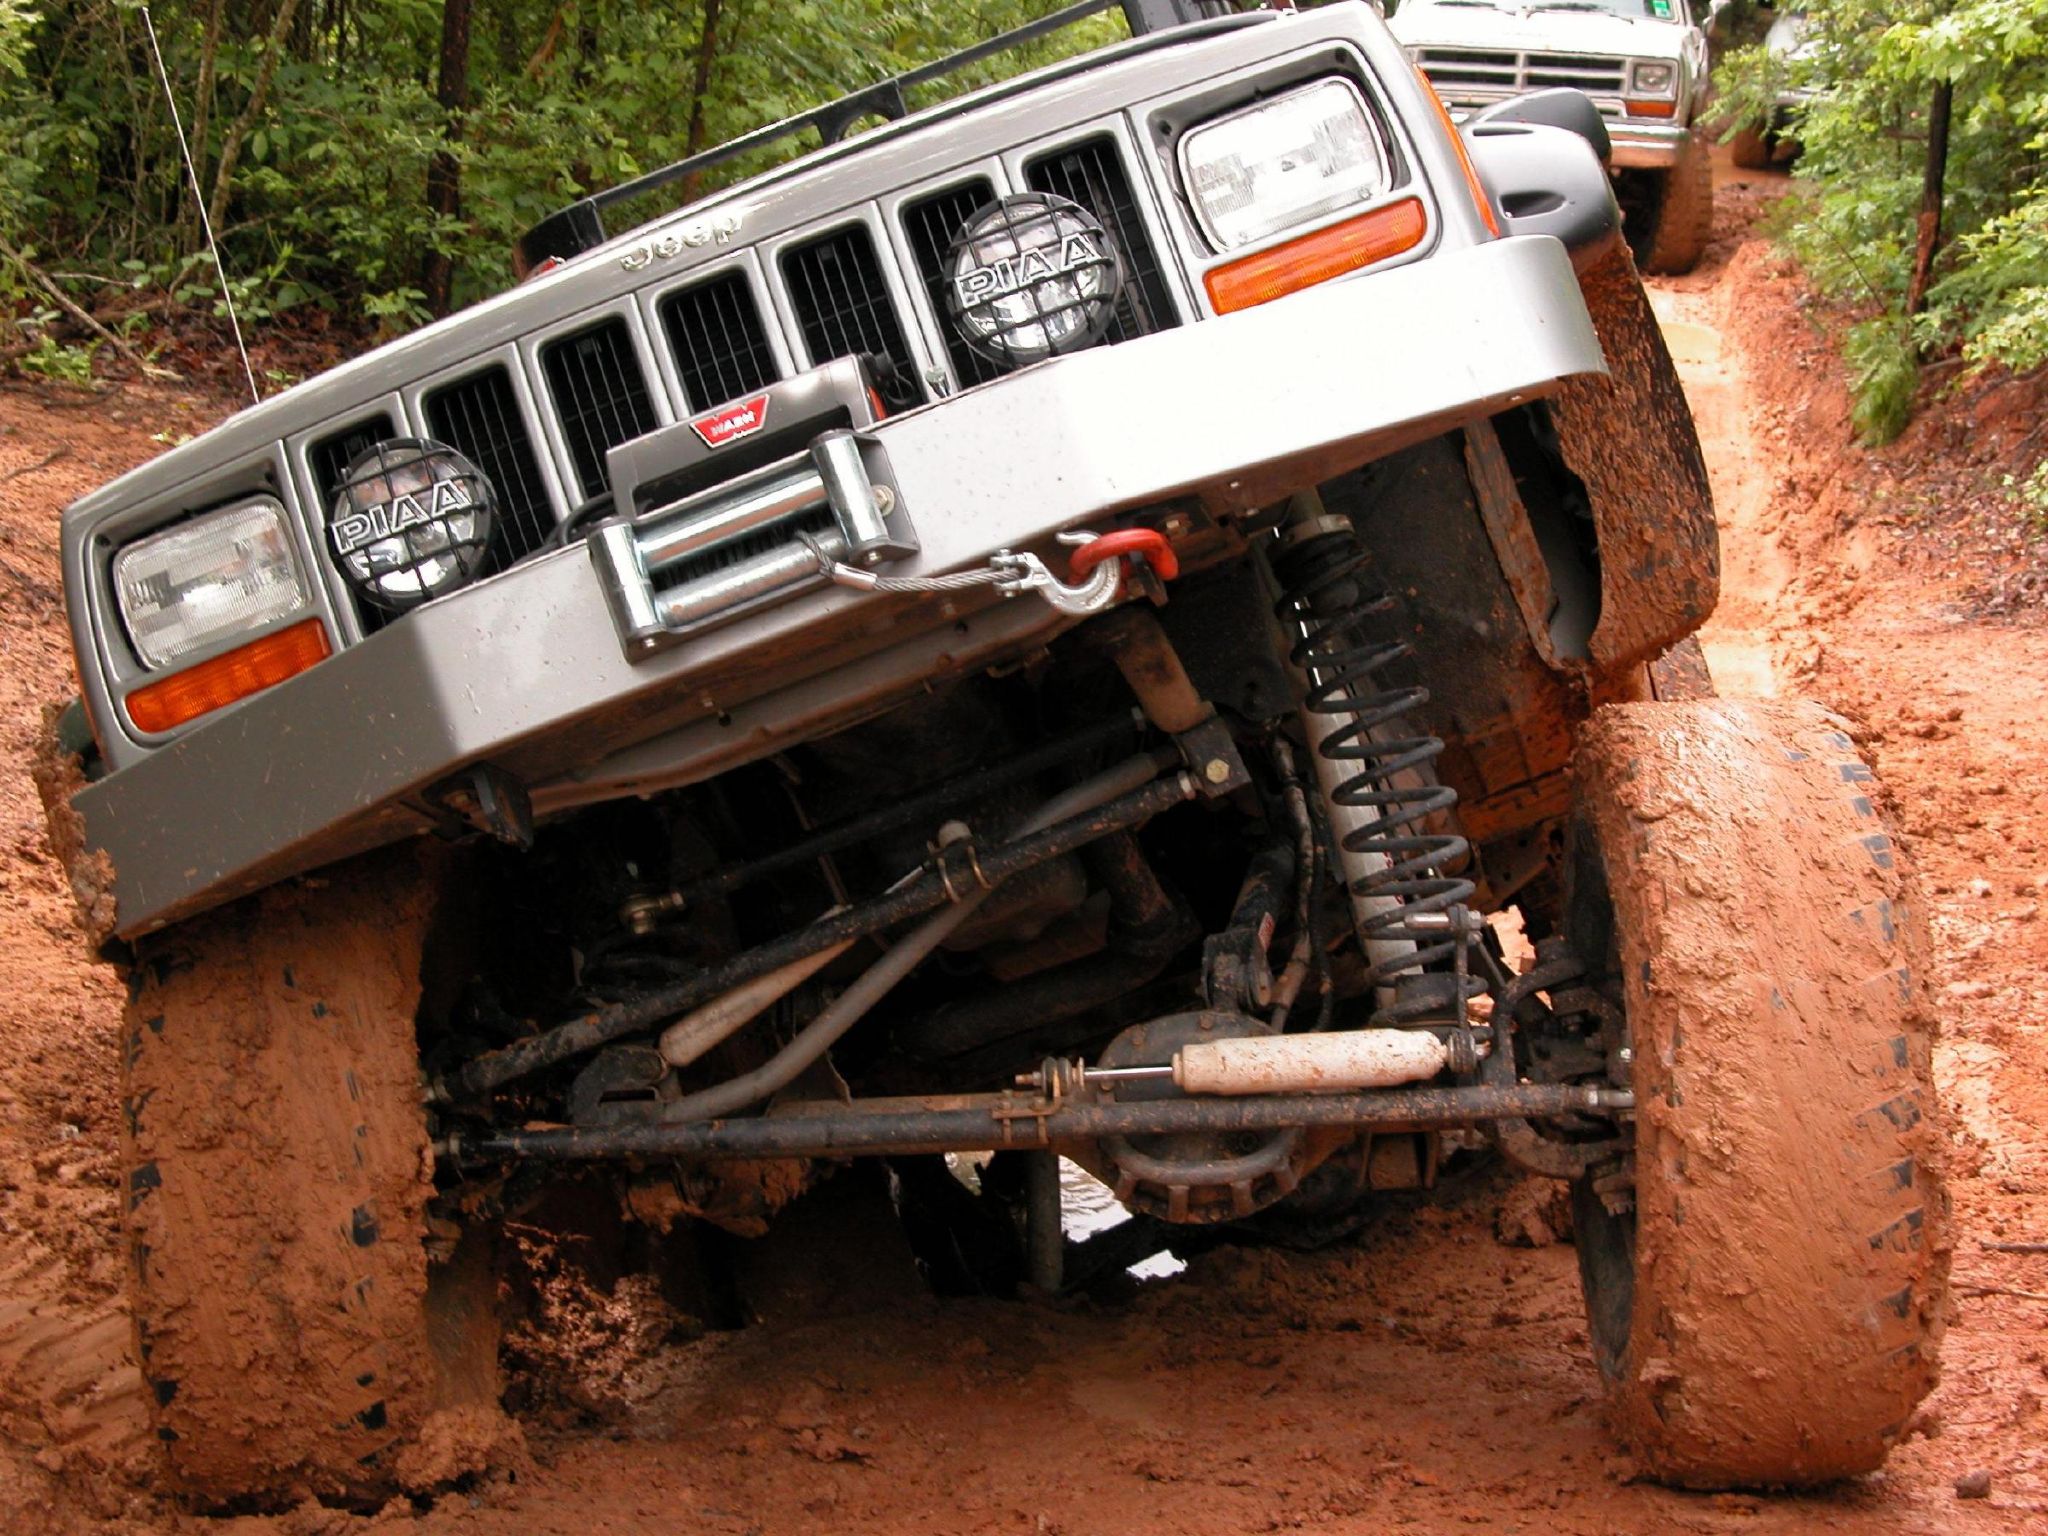 File:Jeep Cherokee offroad 1.jpg